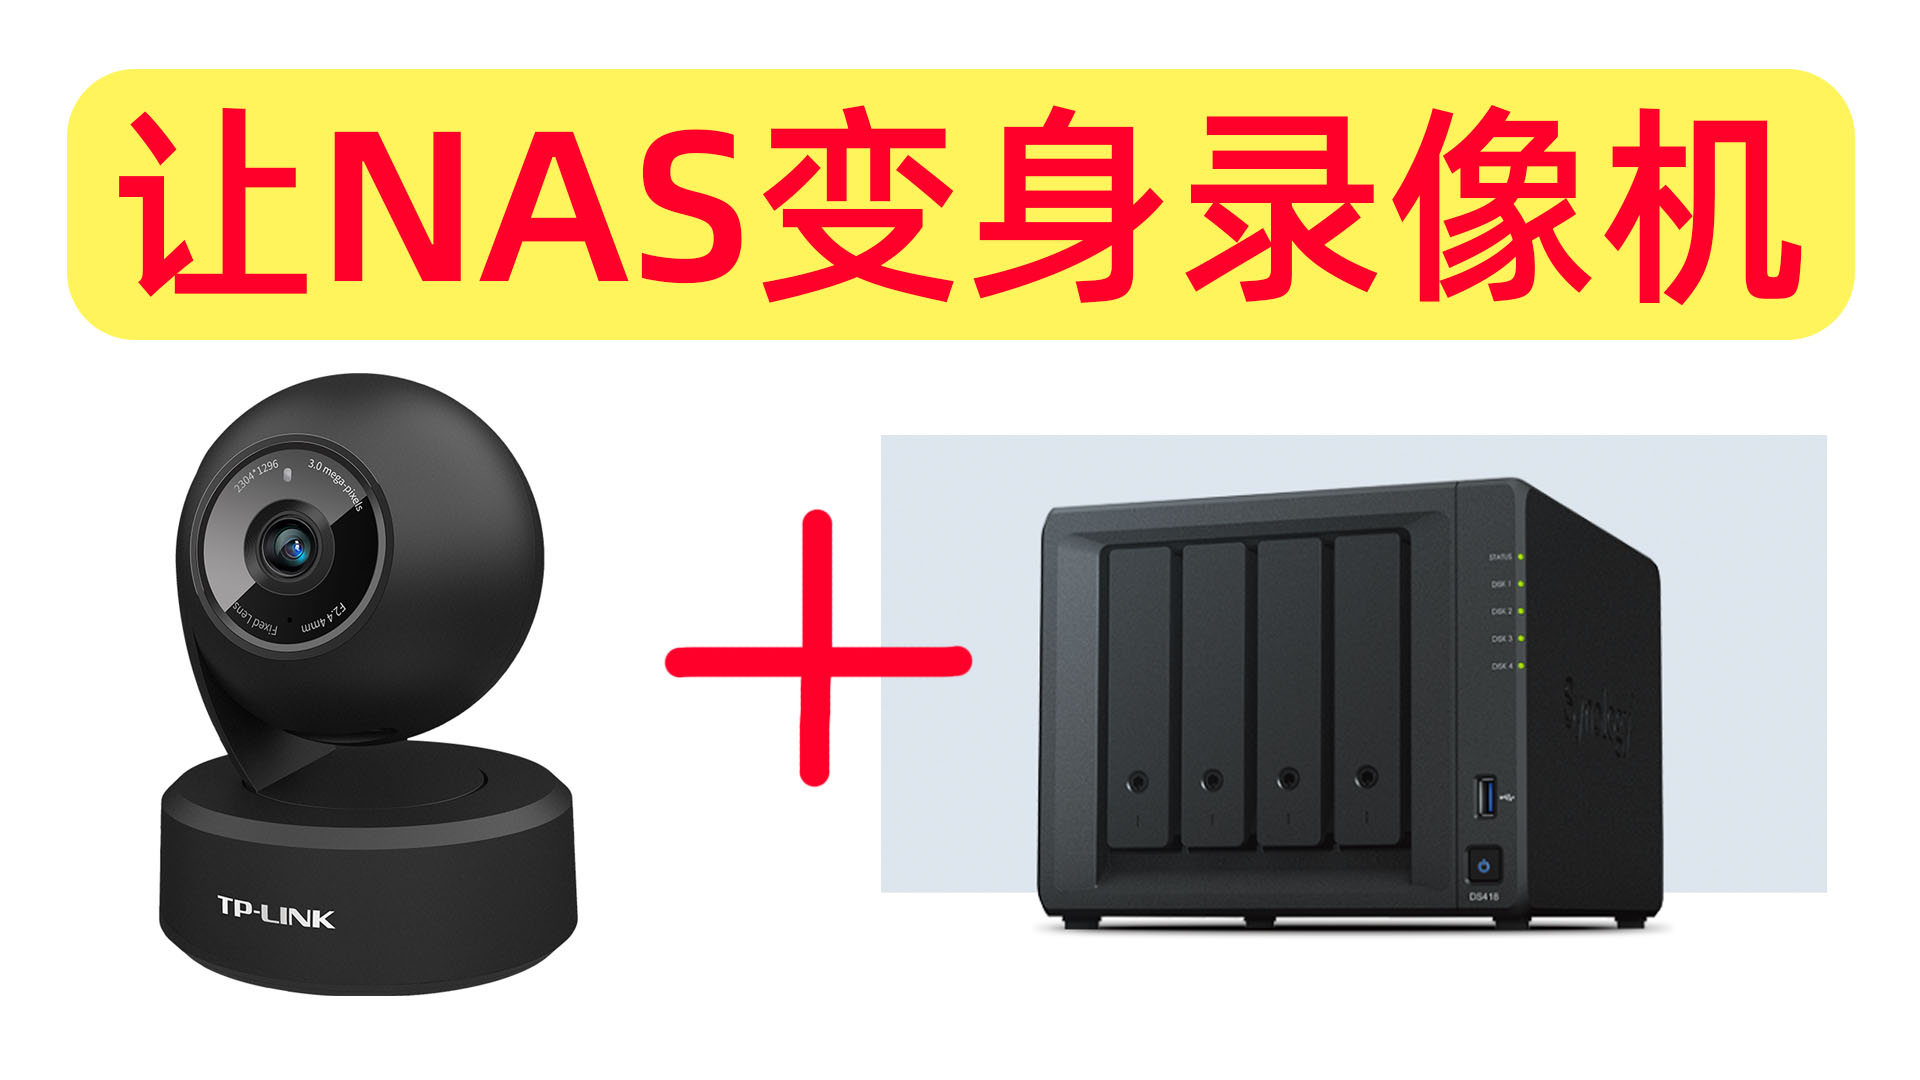 NAS变身NVR录像机，接入监控摄像头实现实时录制、远程回放、存储